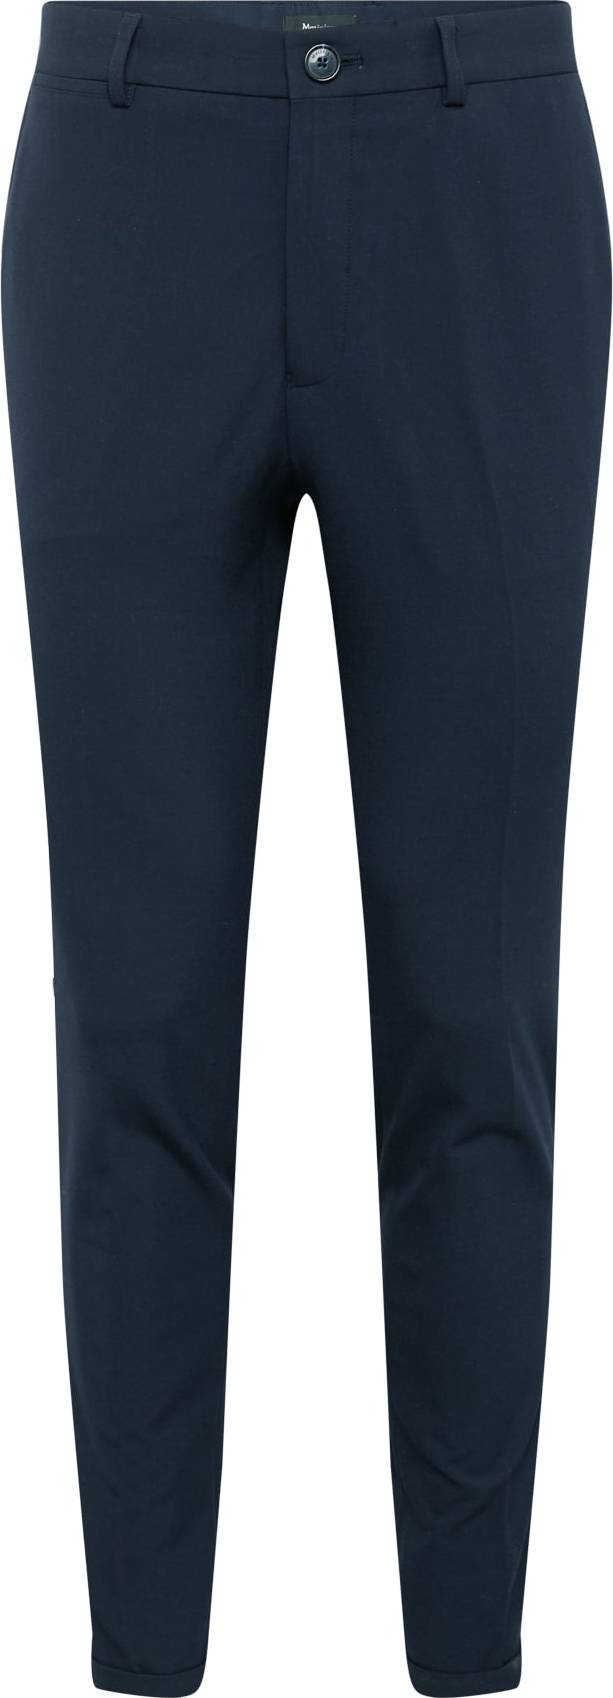 Matinique Chino kalhoty 'Liam' námořnická modř